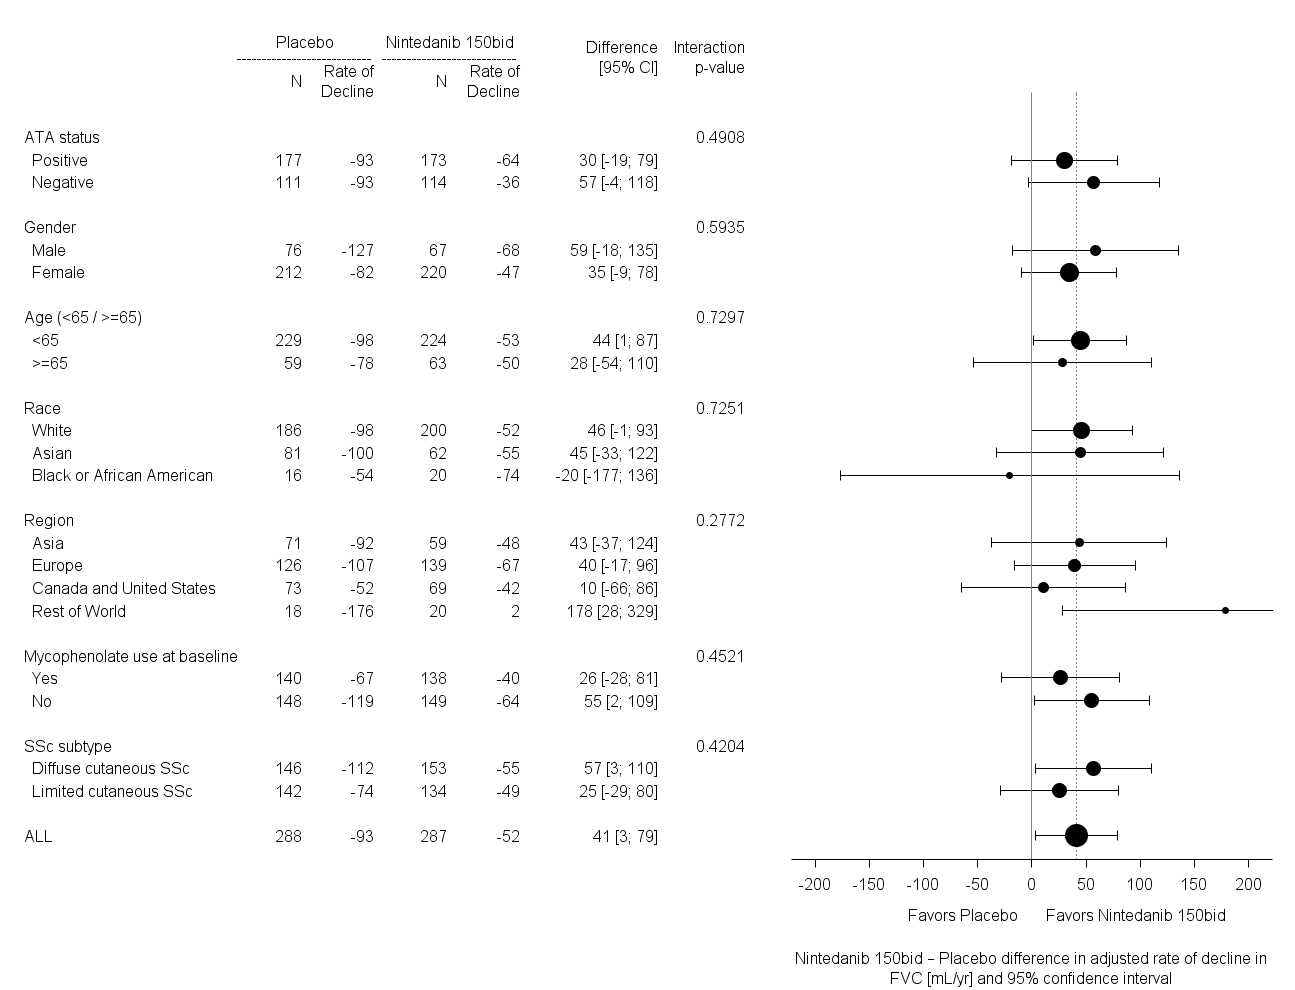 Rate of decline in FVC with nintedanib vs placebo over 52 weeks.